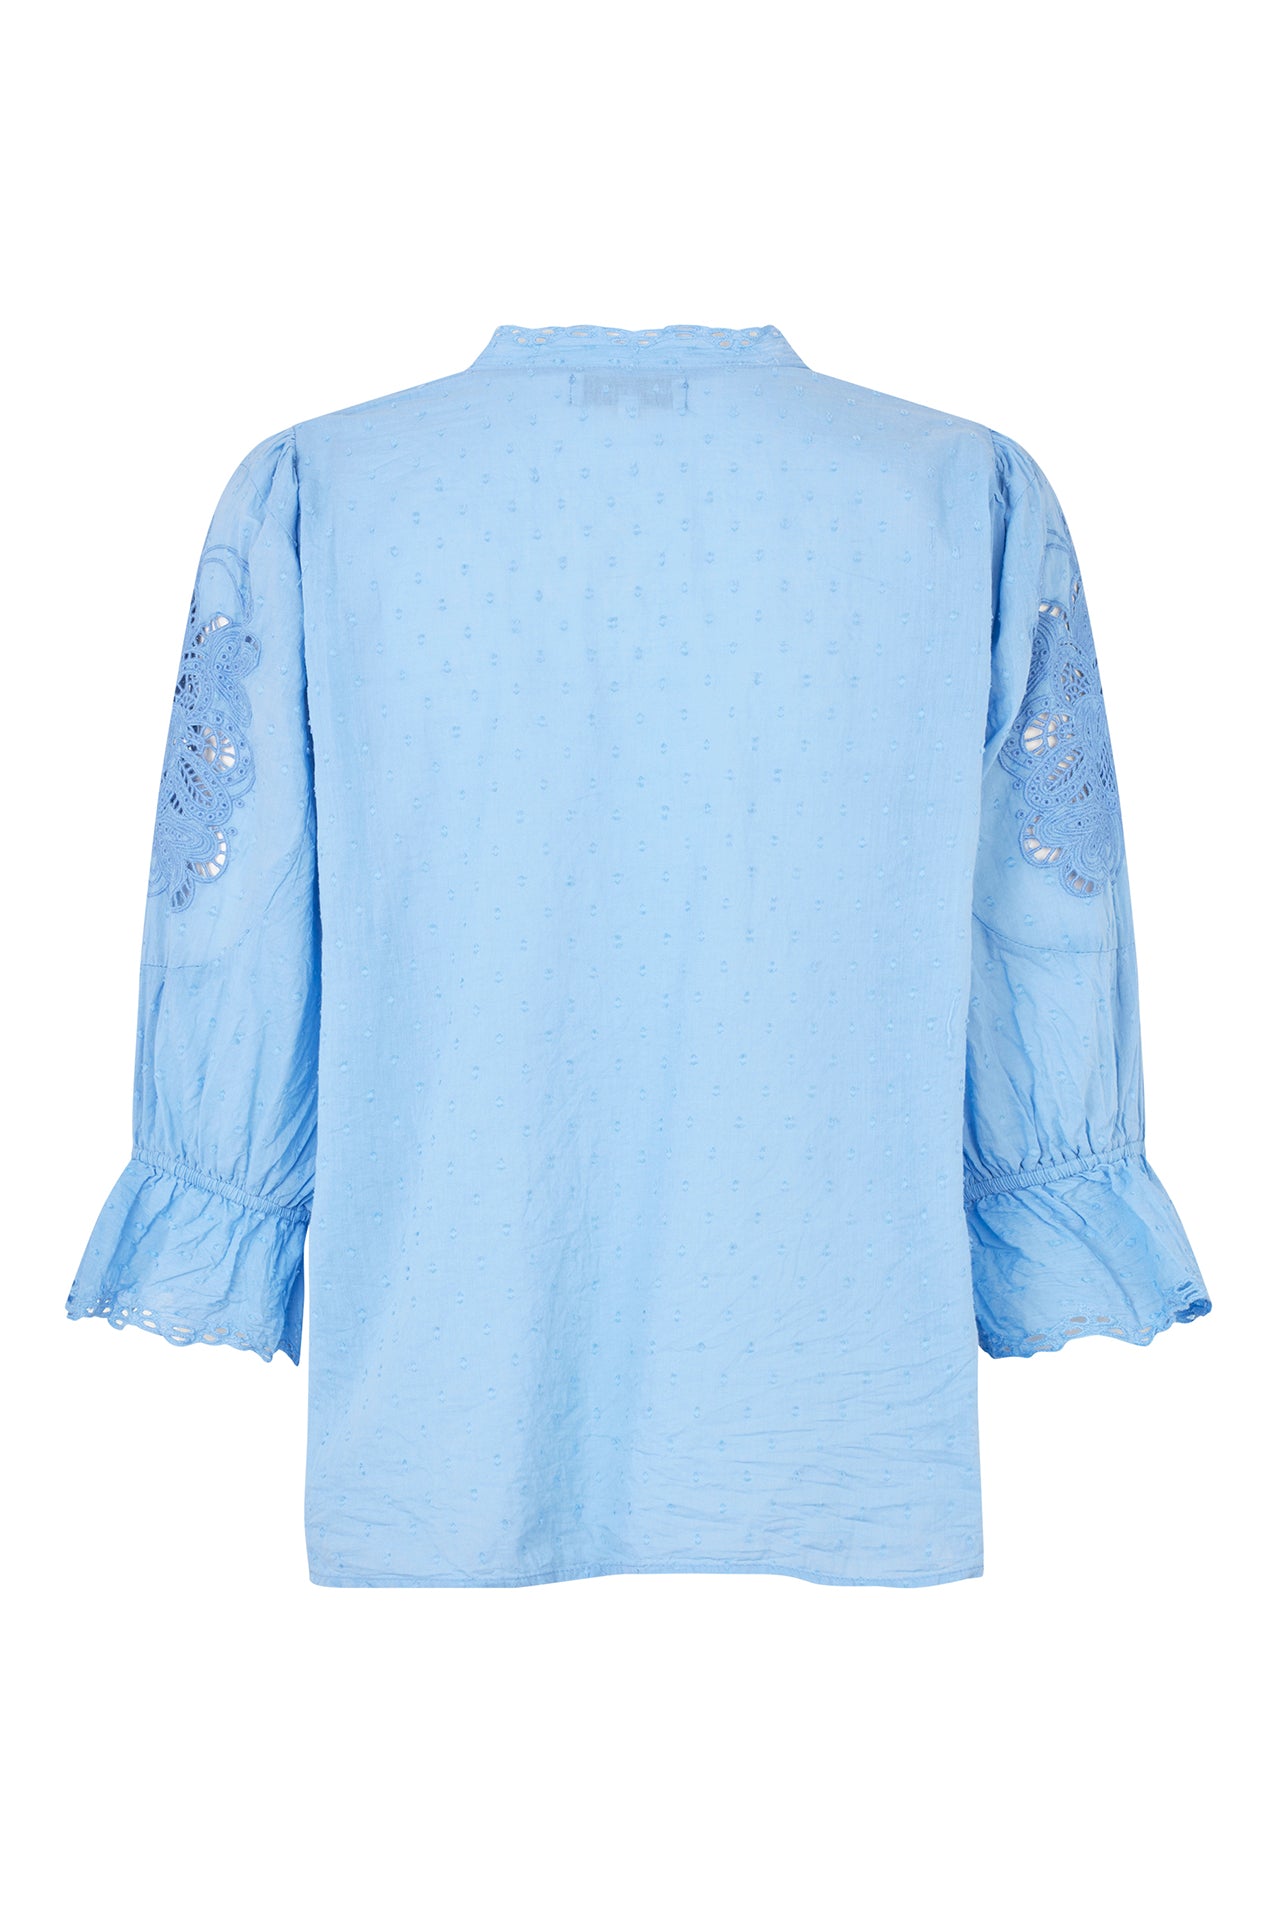 Lollys Laundry CharlieLL Shirt Shirt 20 Blue